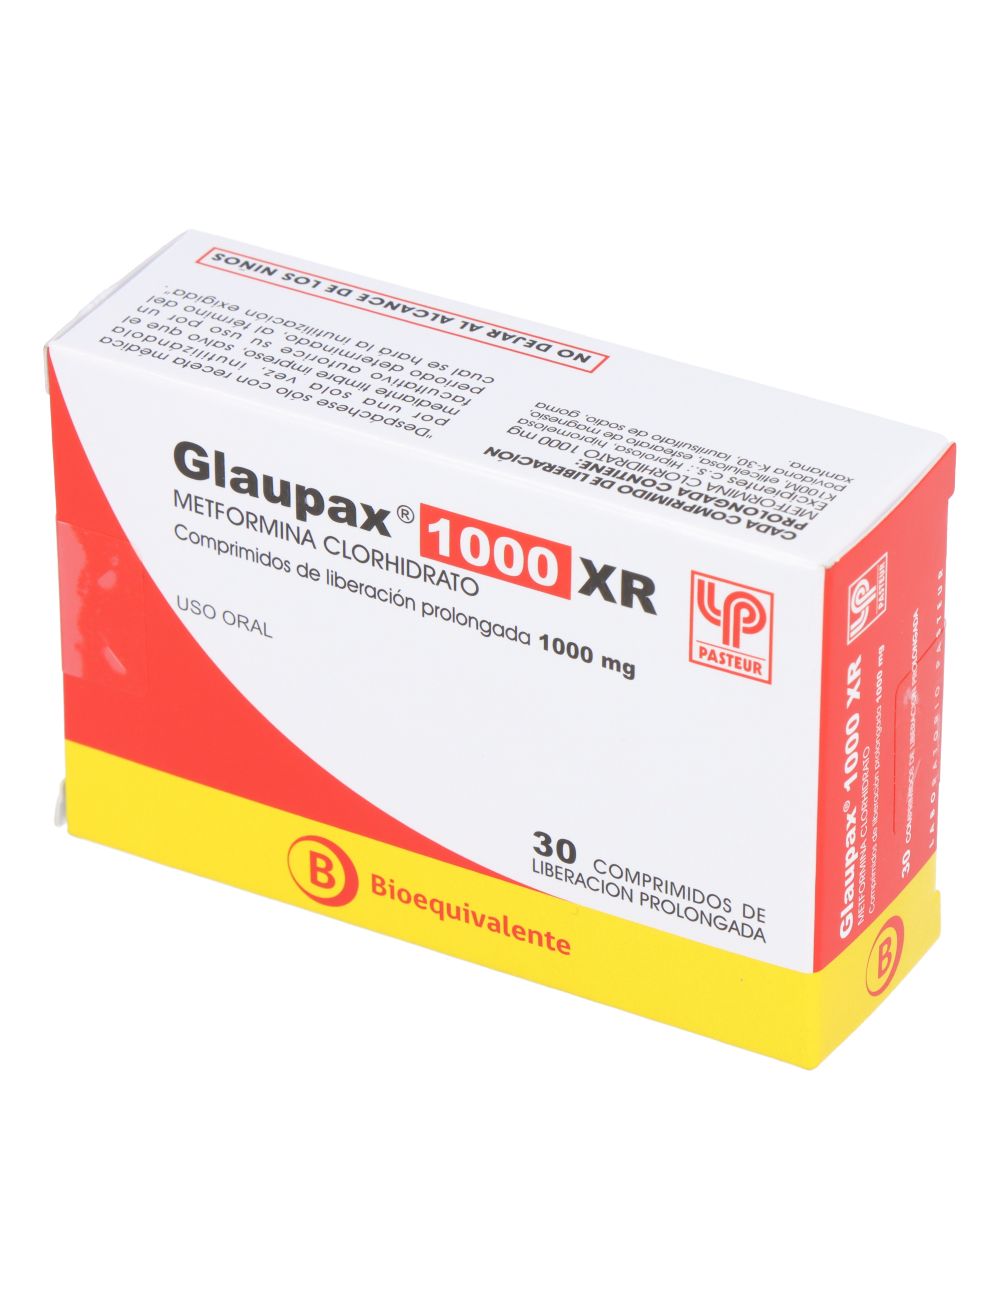 Metformina Glaupax 1000 Xr 30 Comprimidos Liberacion Prolongada Bioequivalente Labpasteur 6237